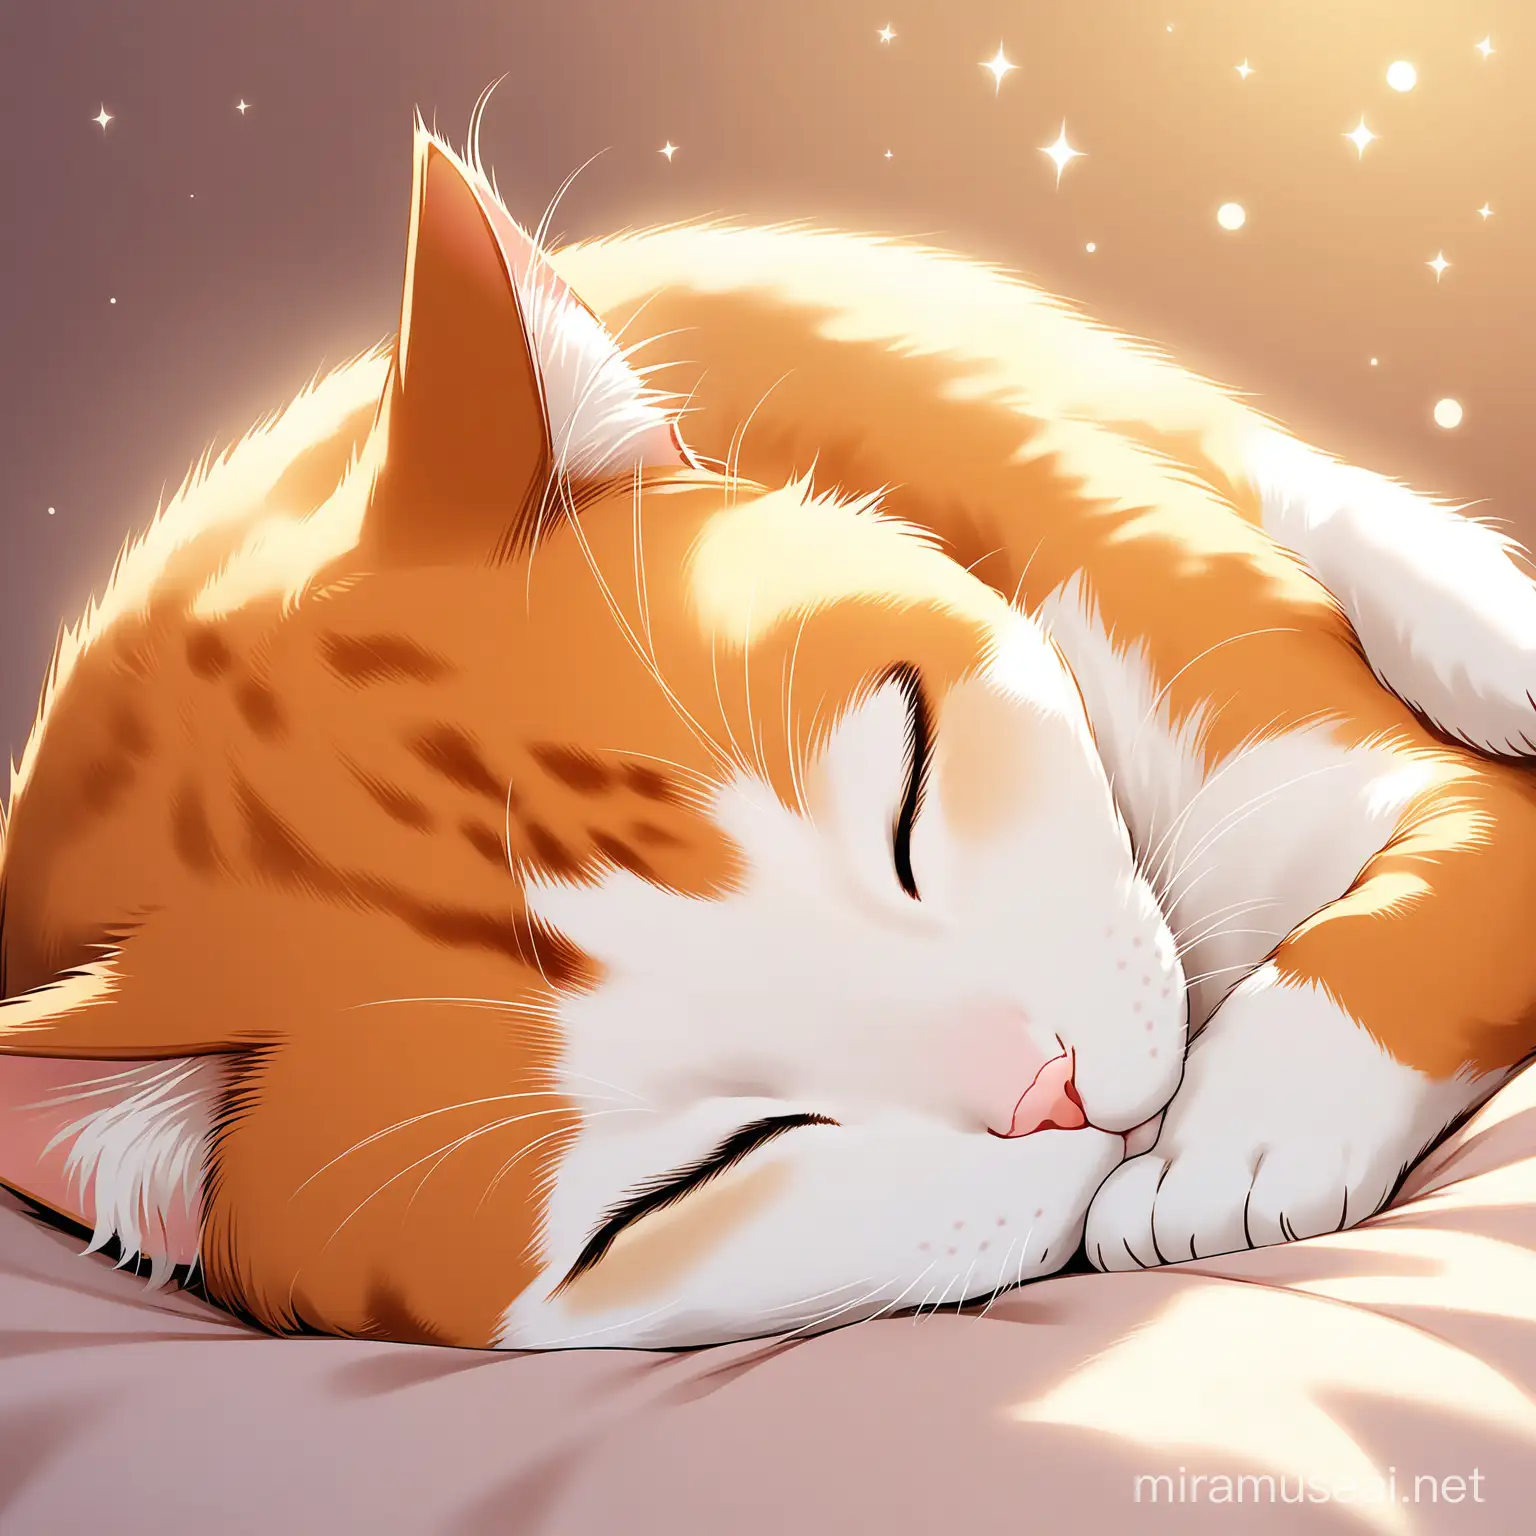 Tranquil Sleeping Cat in Sunlit Room